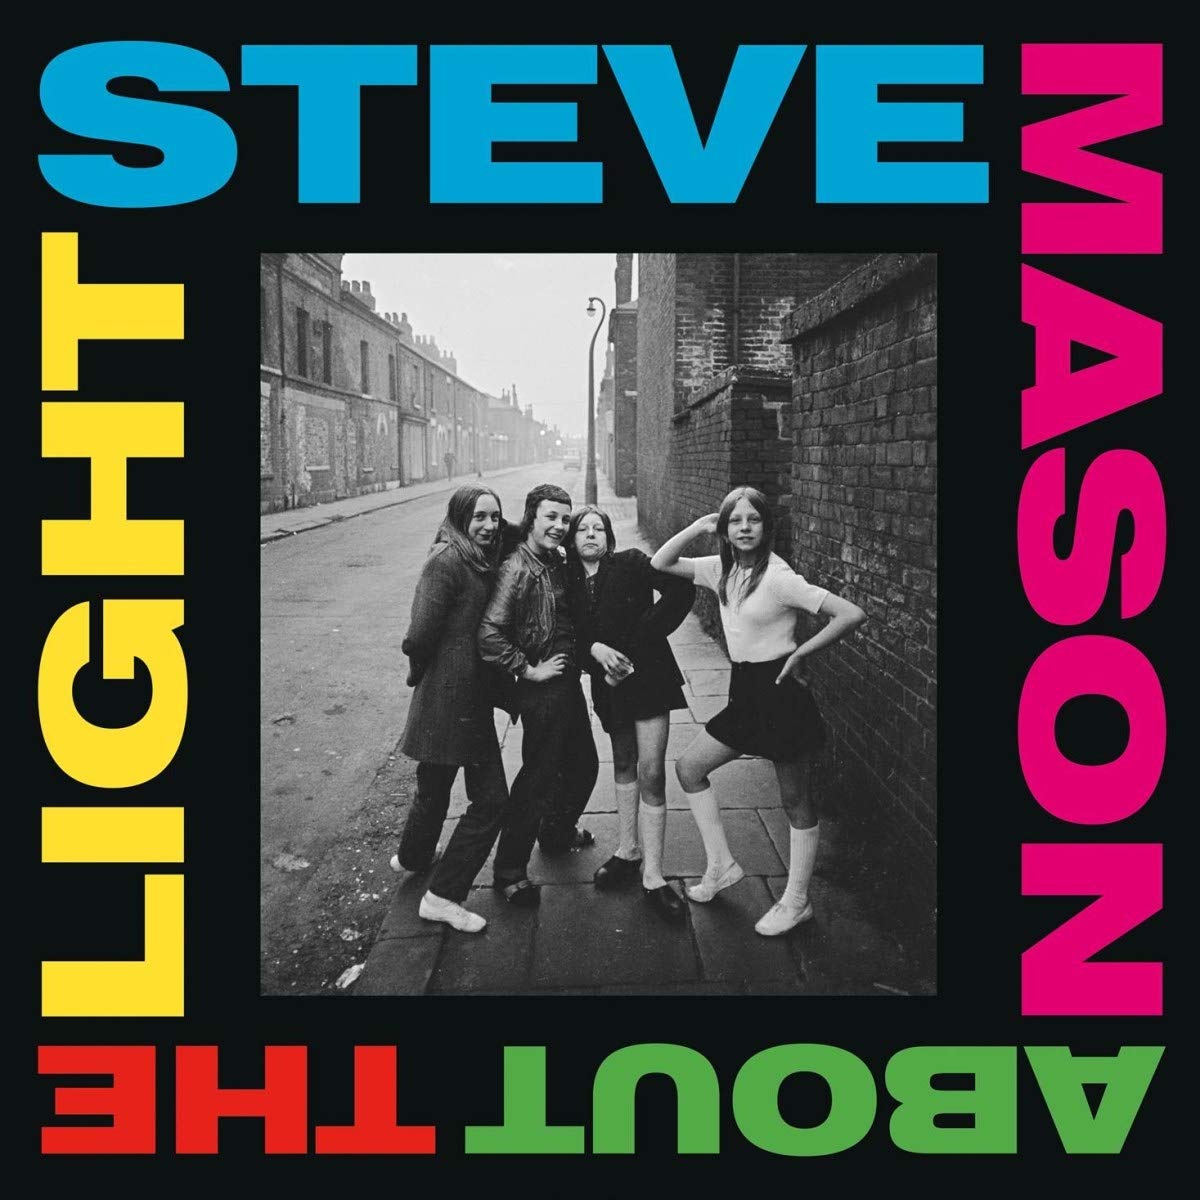 Steve Mason - About The Light vinyl cover